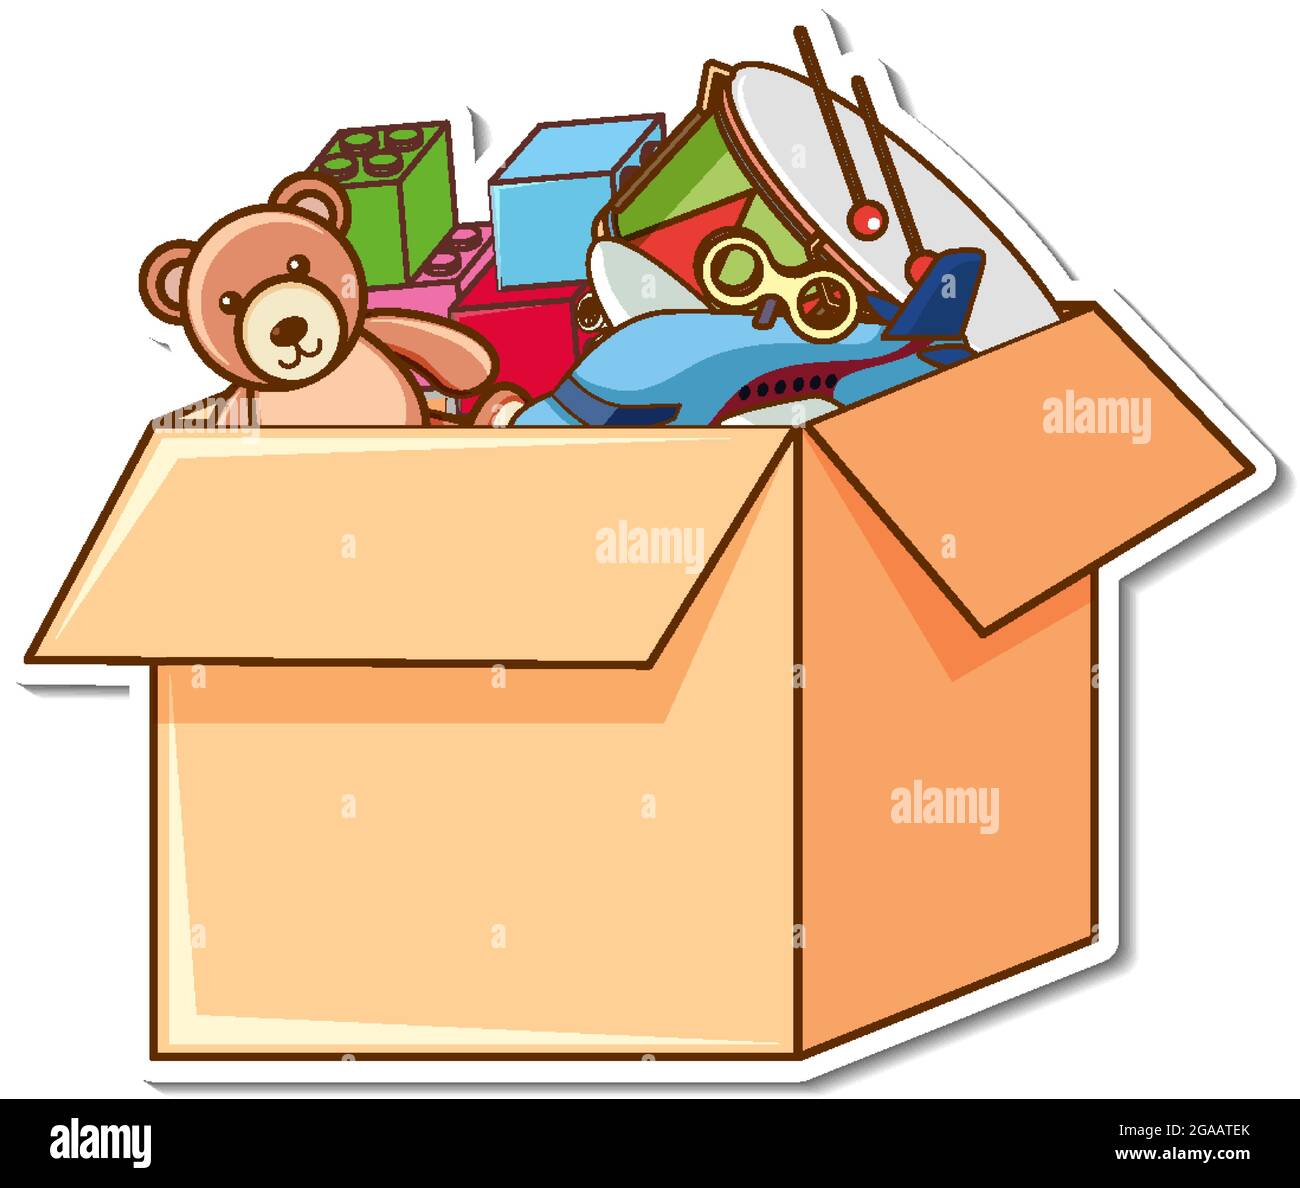 Eine Kiste voller Kinderspielzeug in Sticker-Stil Illustration  Stock-Vektorgrafik - Alamy